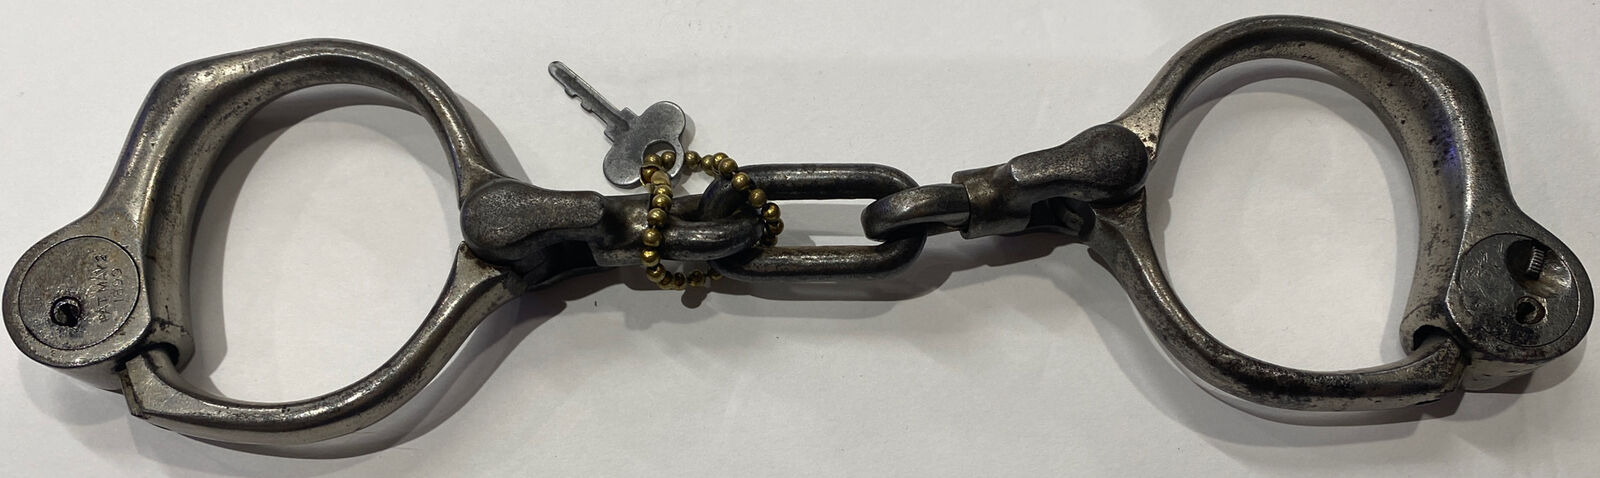 Antique 1899 Shackles Handcuffs 15b77 padlock jail prisoner Bean Cobb W/KEY